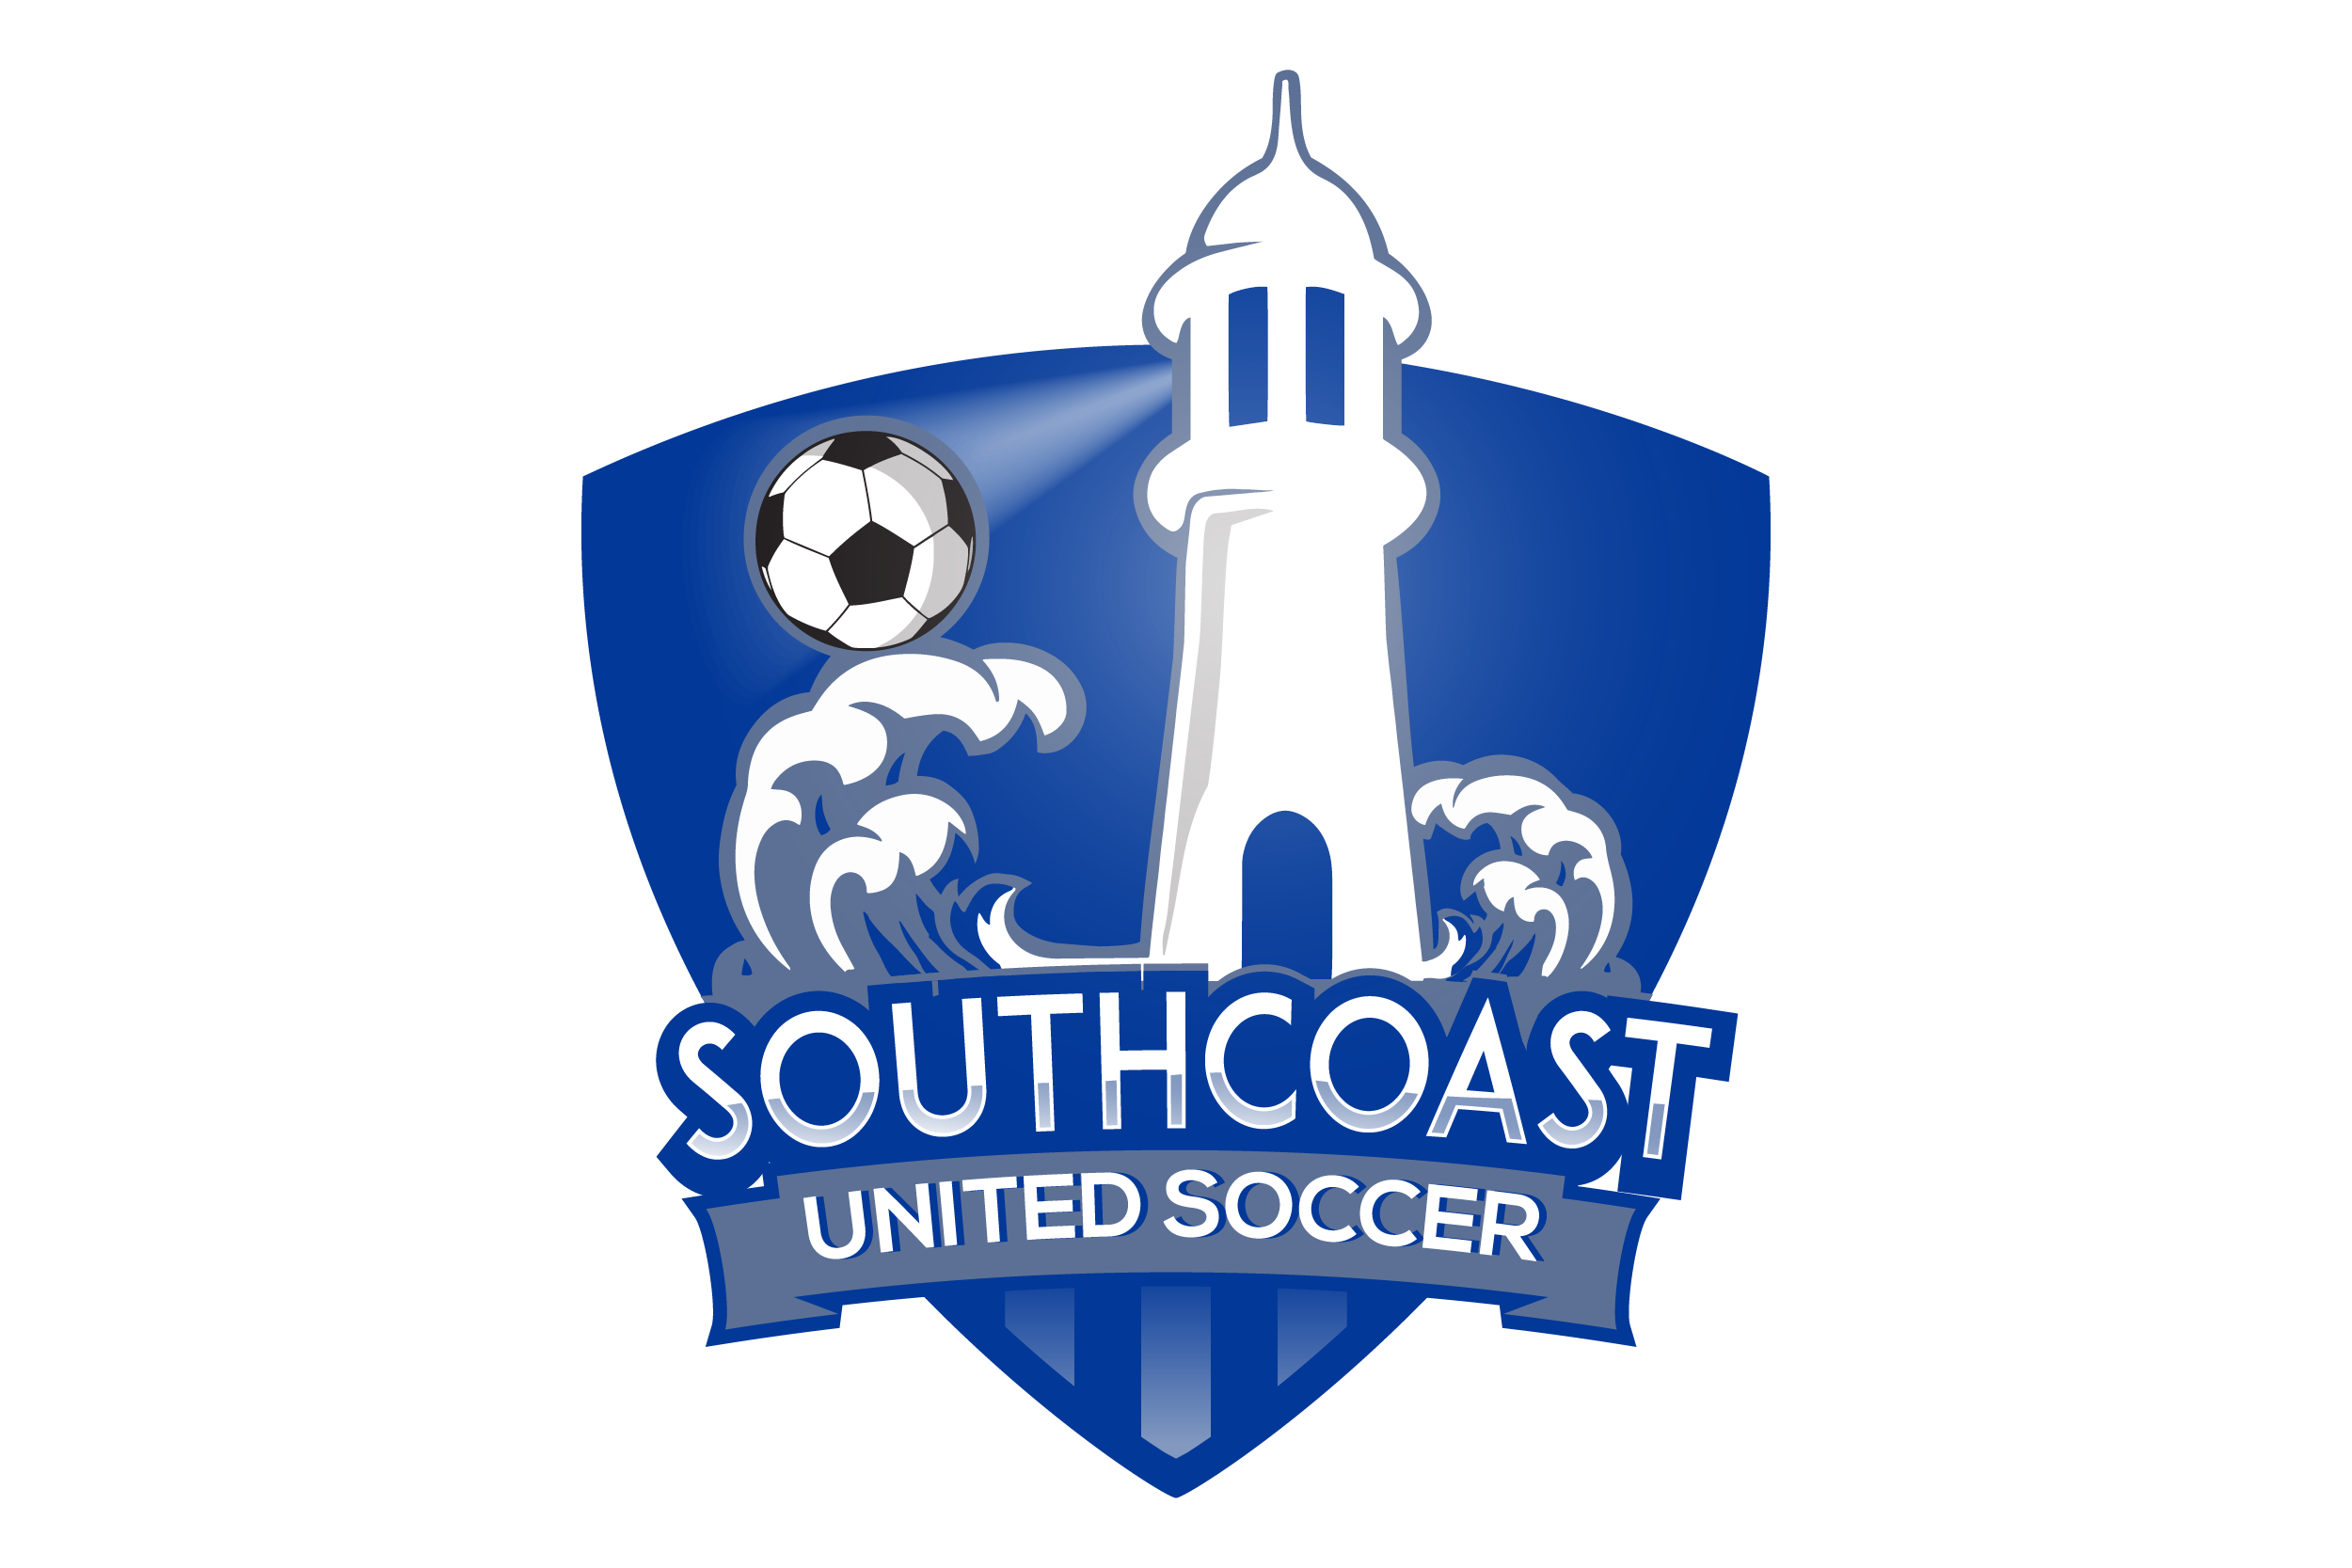 Southcoast United Soccer Club team badge